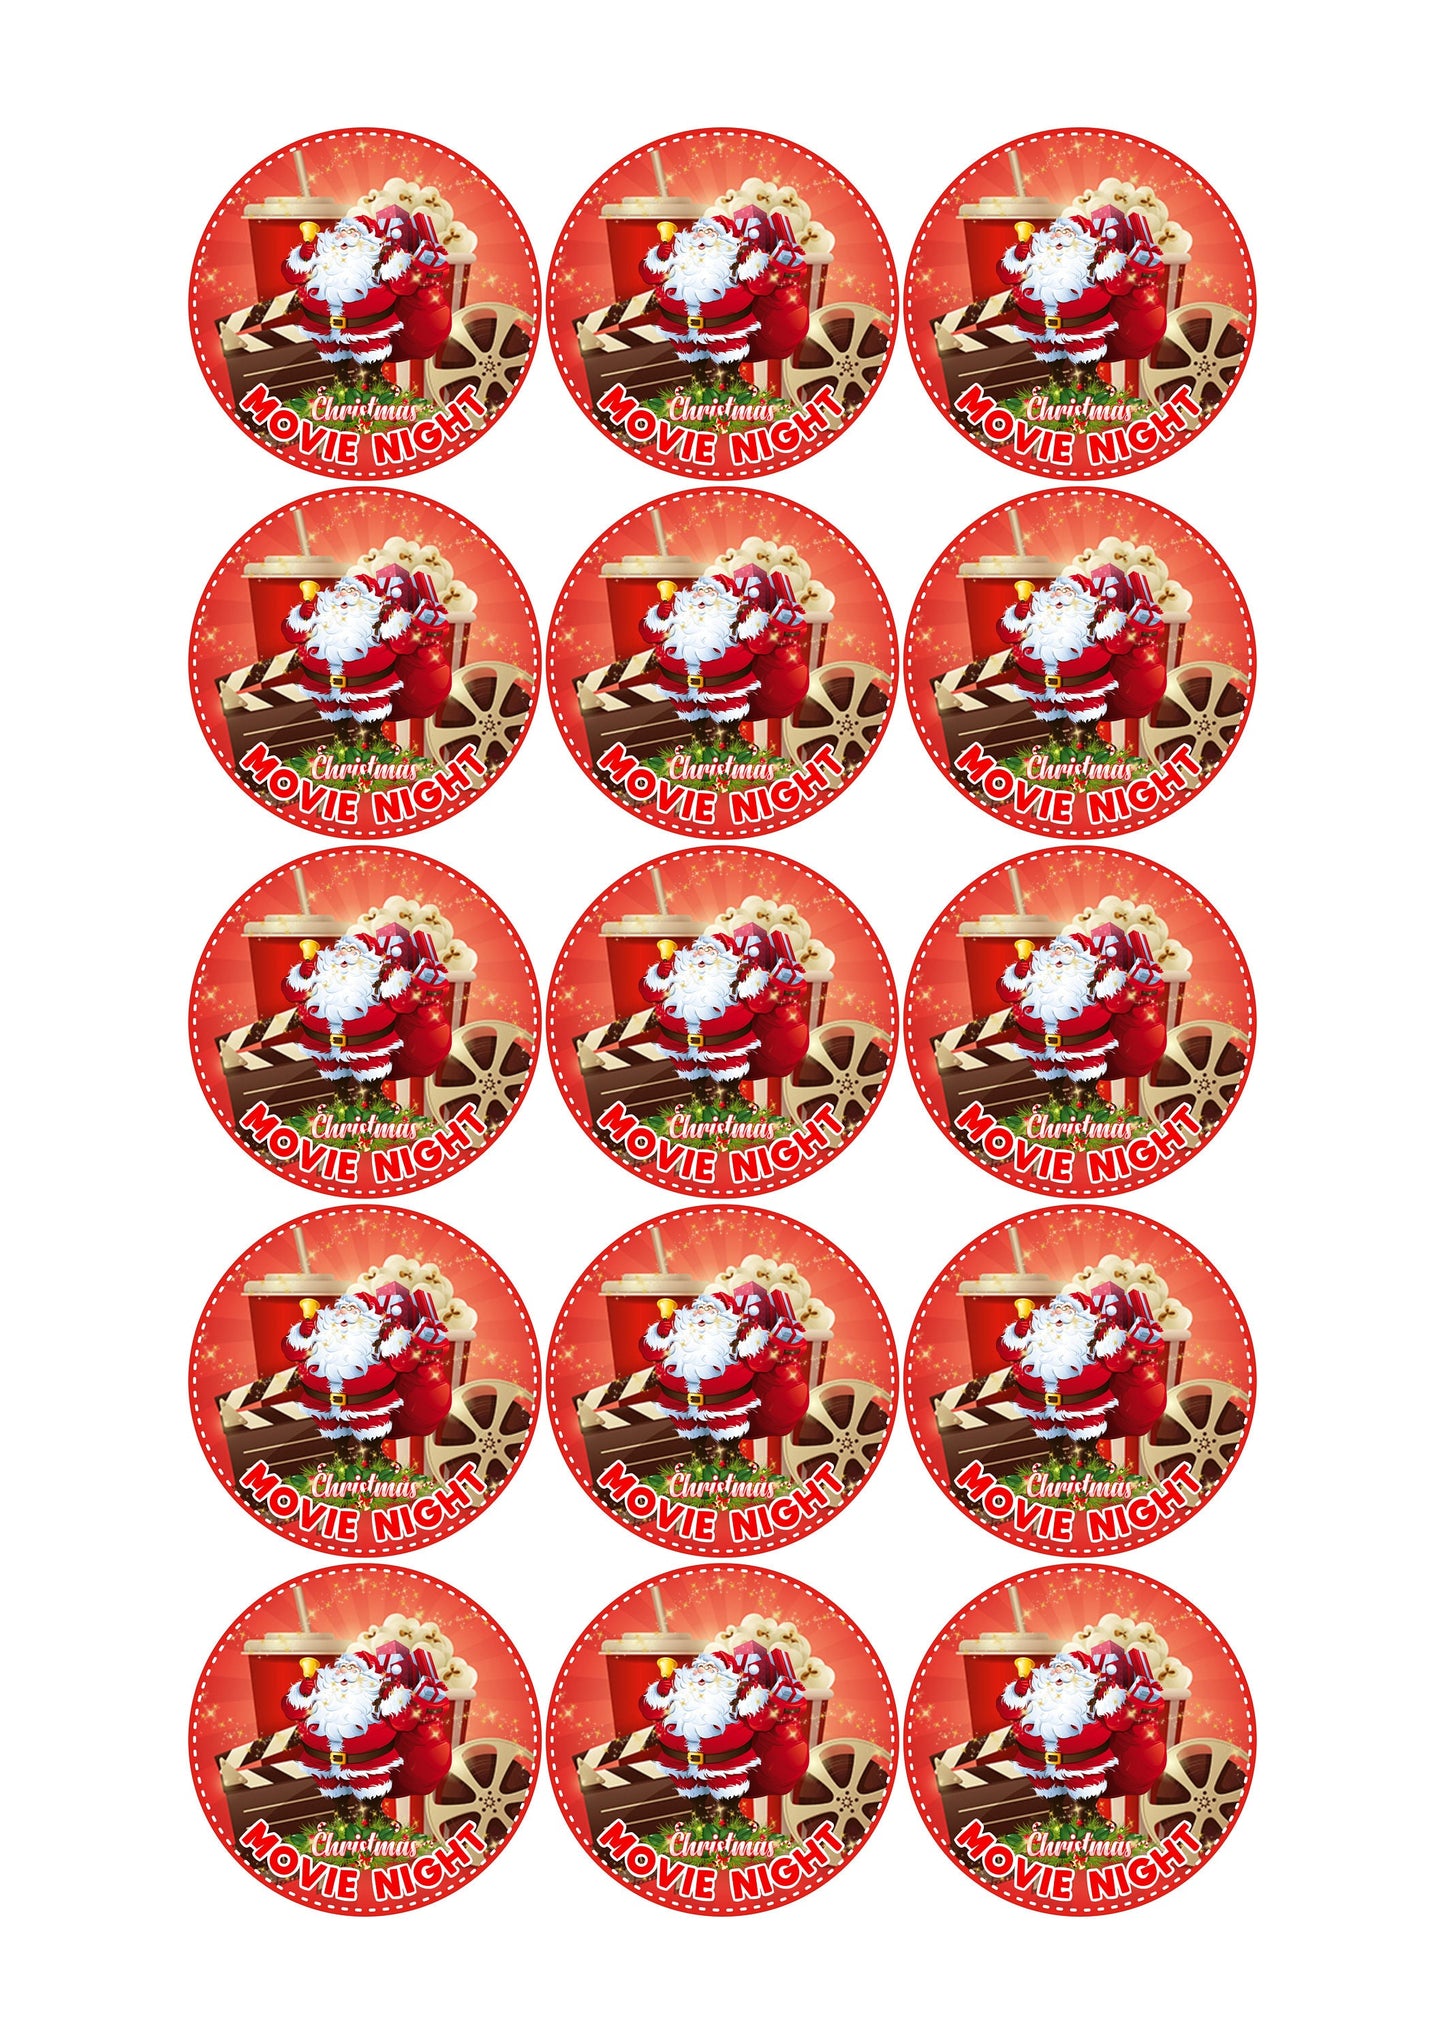 A4 Sheet: Christmas Movie Night Stickers